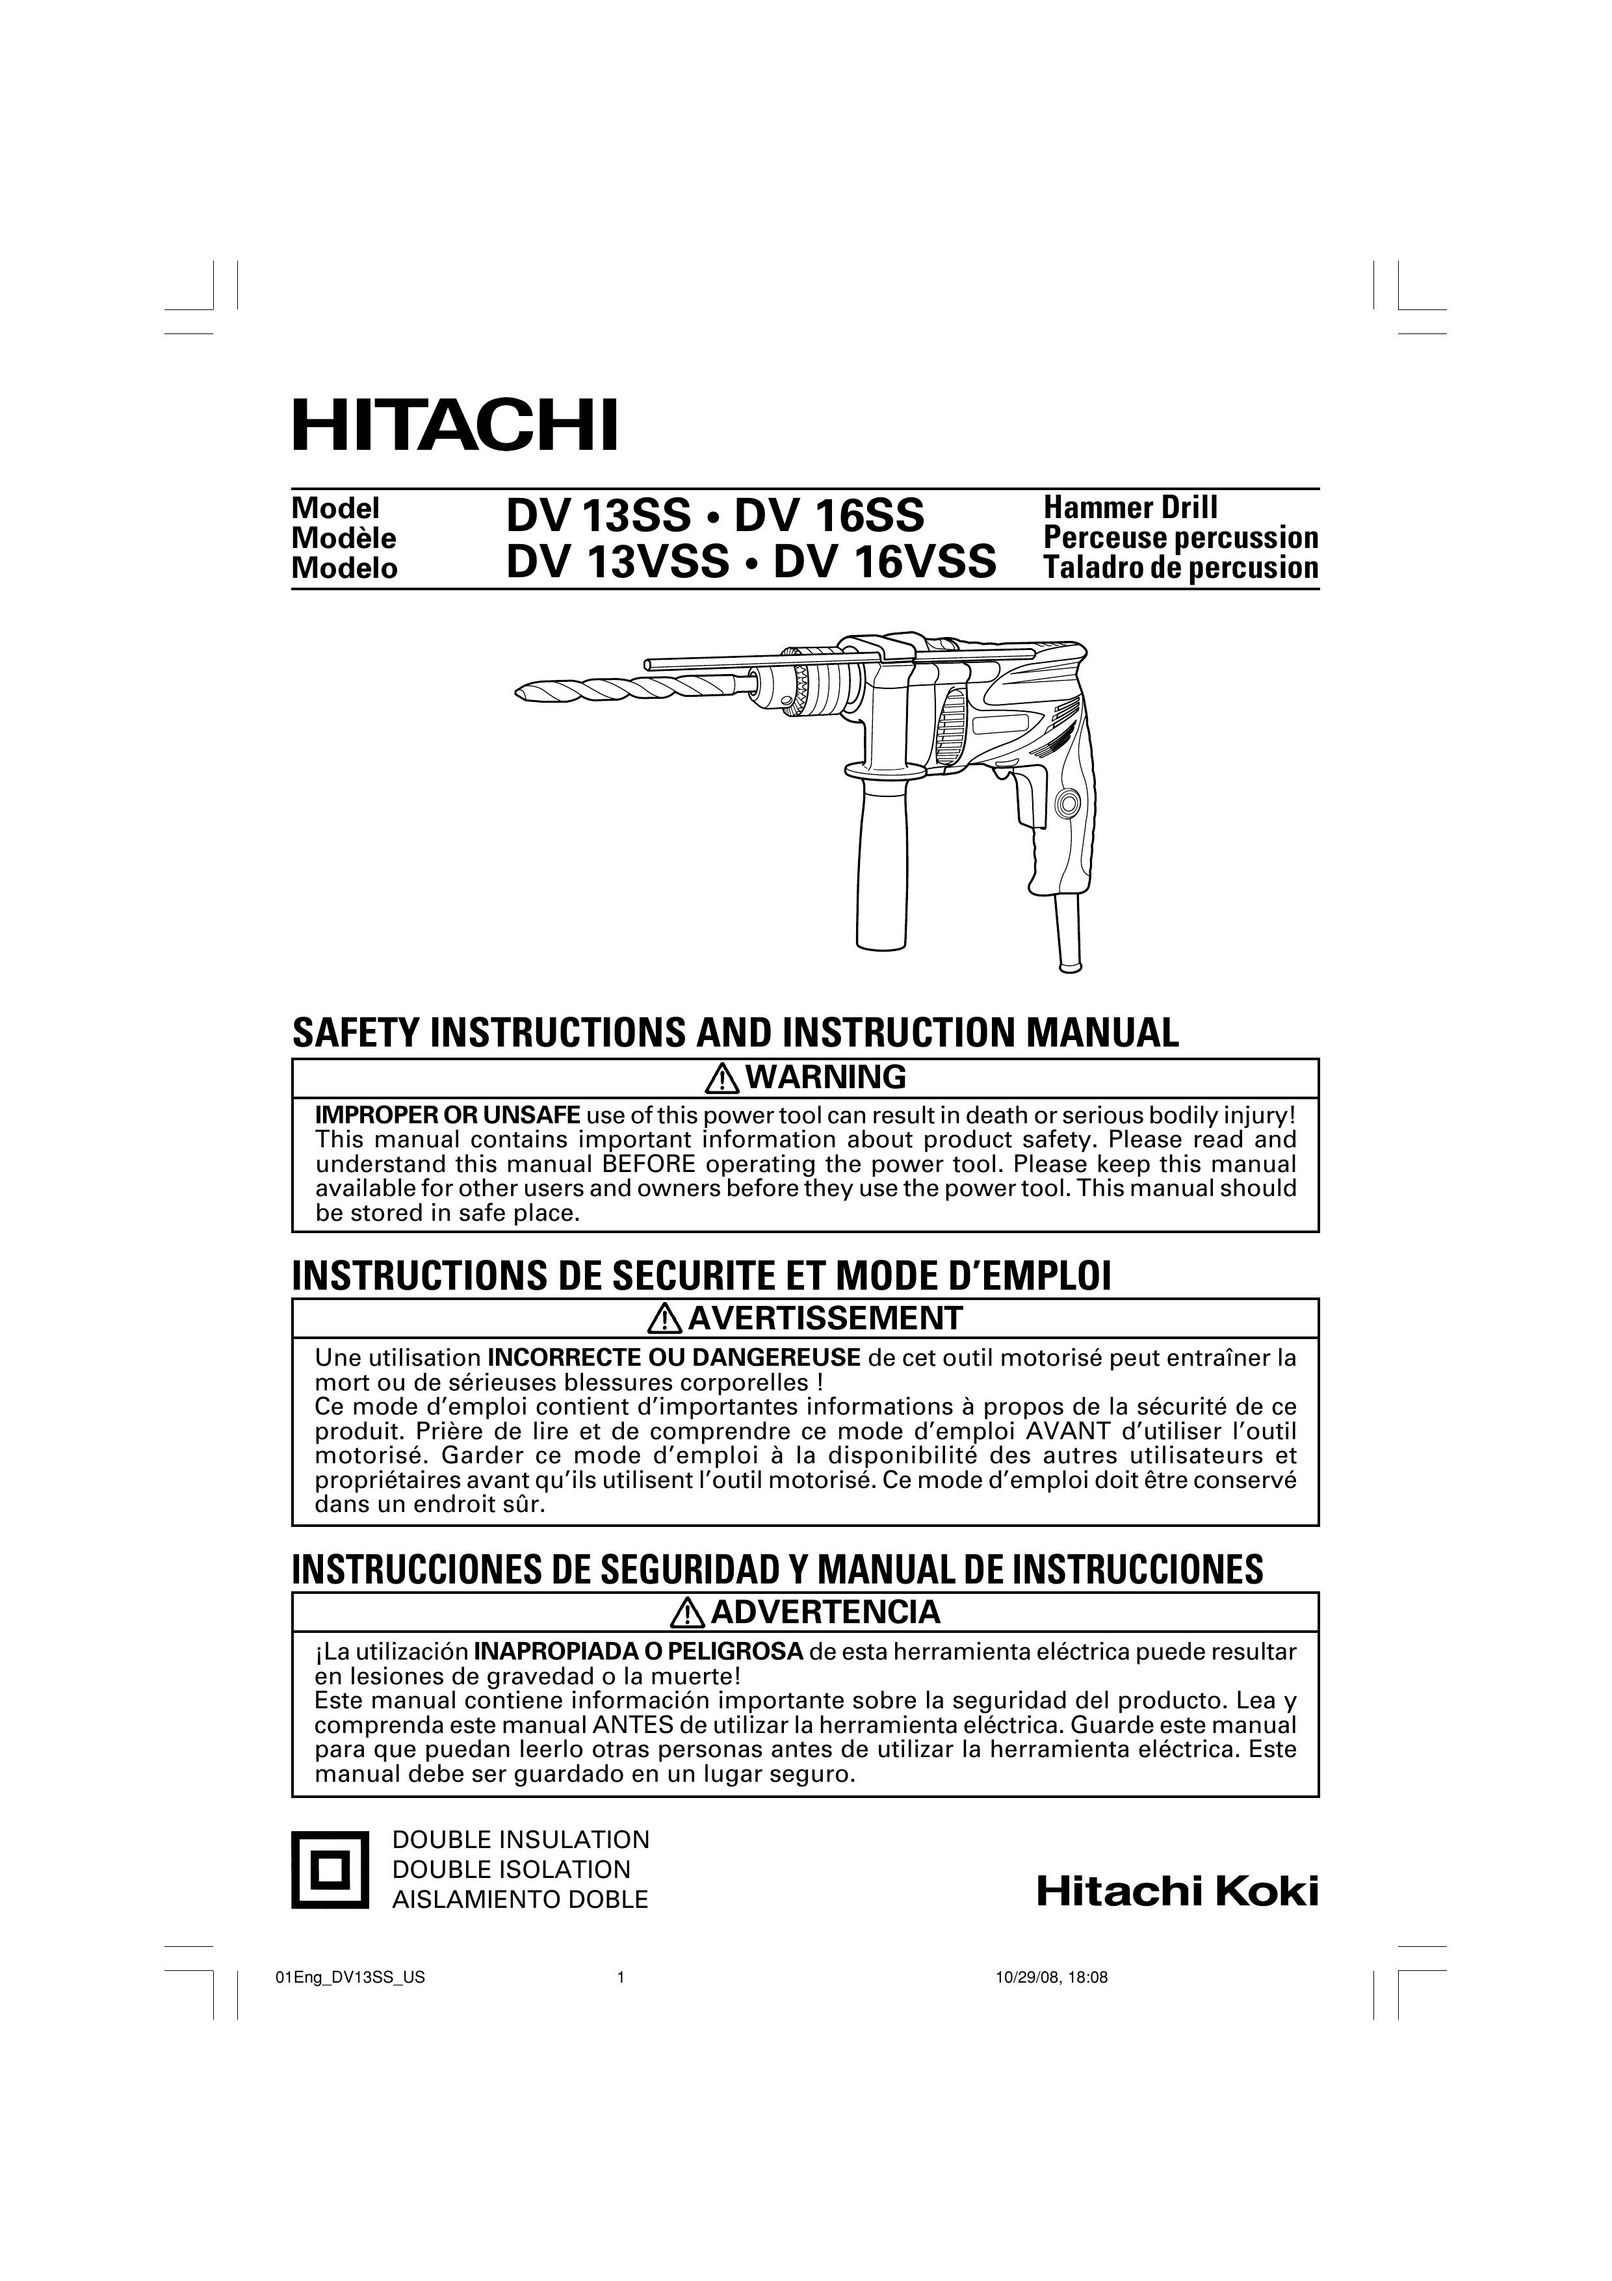 Hitachi DV 16VSS Cordless Drill User Manual